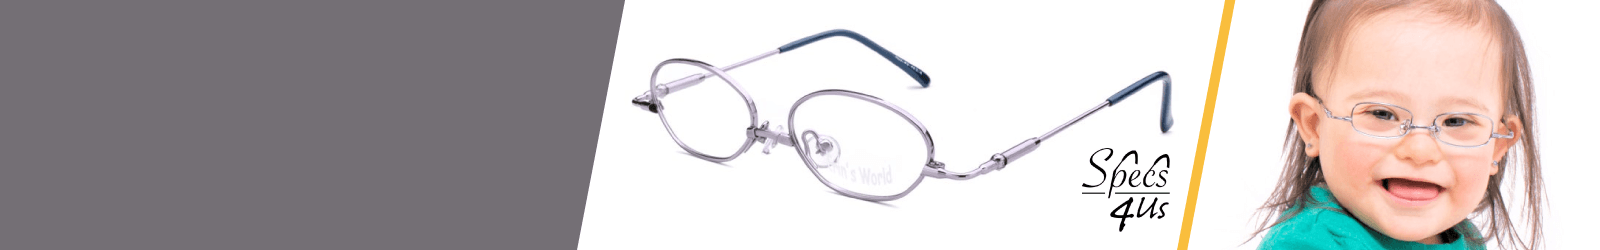 Plum Specs4us Eyeglass Lenses